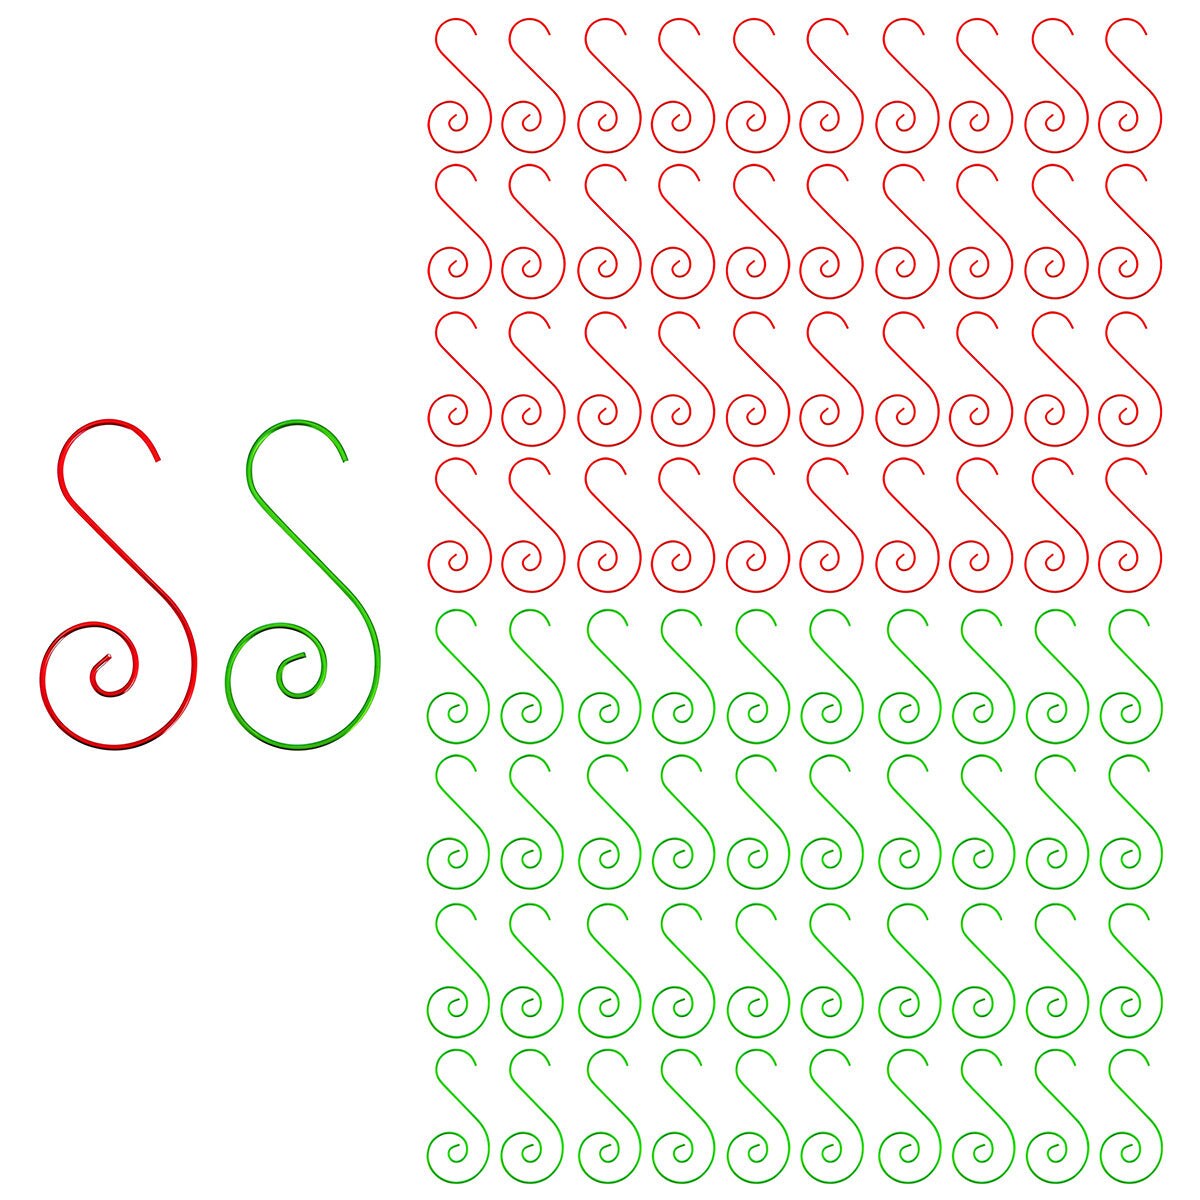 Wrapables Christmas Tree Ornament Hooks, S-Shaped Swirl Hooks